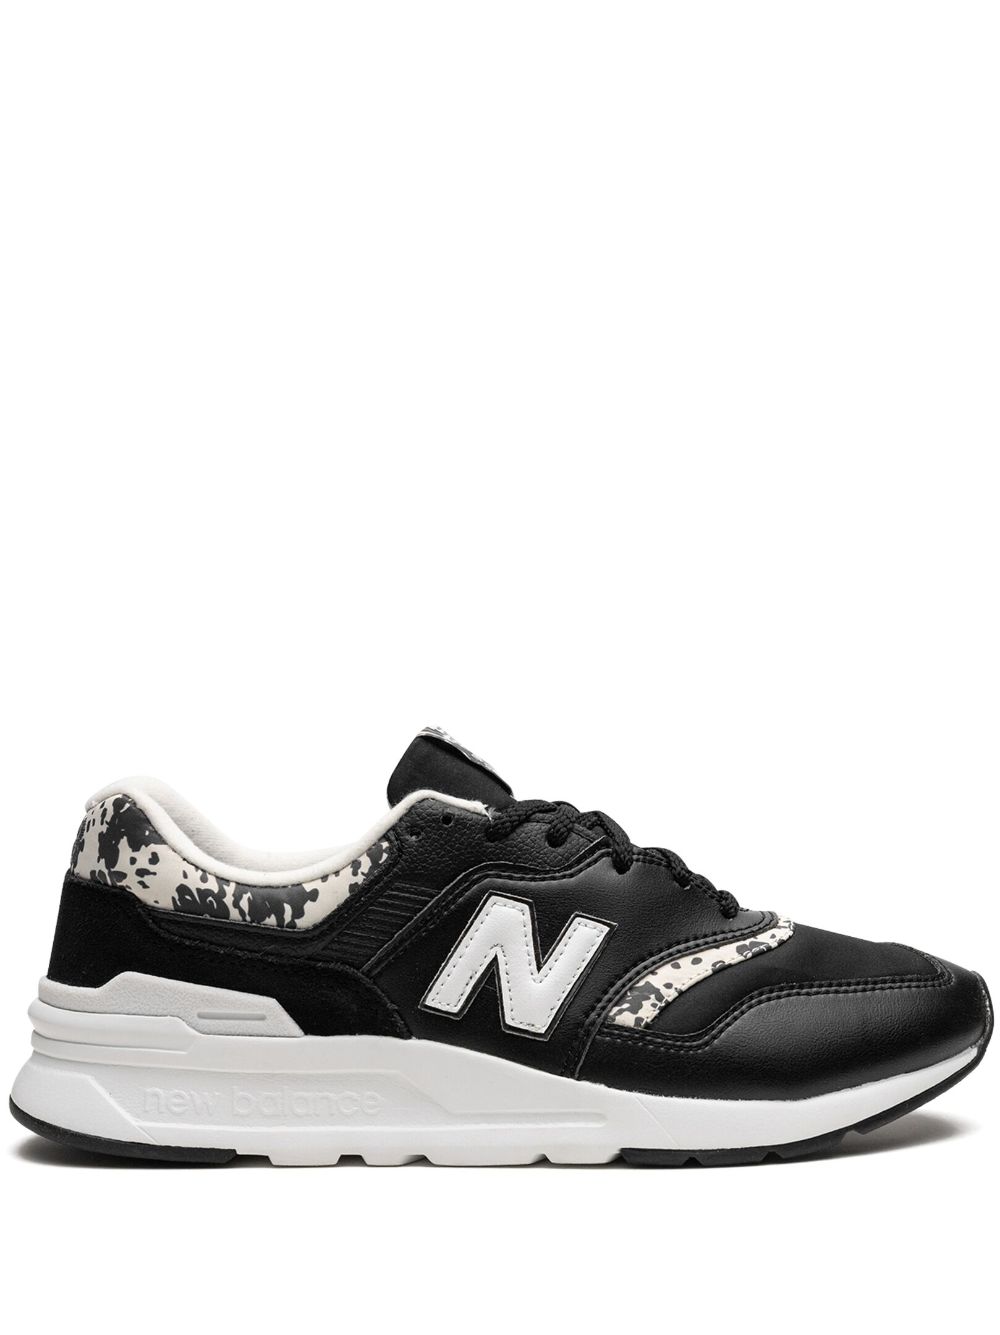 New Balance 997 "Black/Multi" sneakers von New Balance